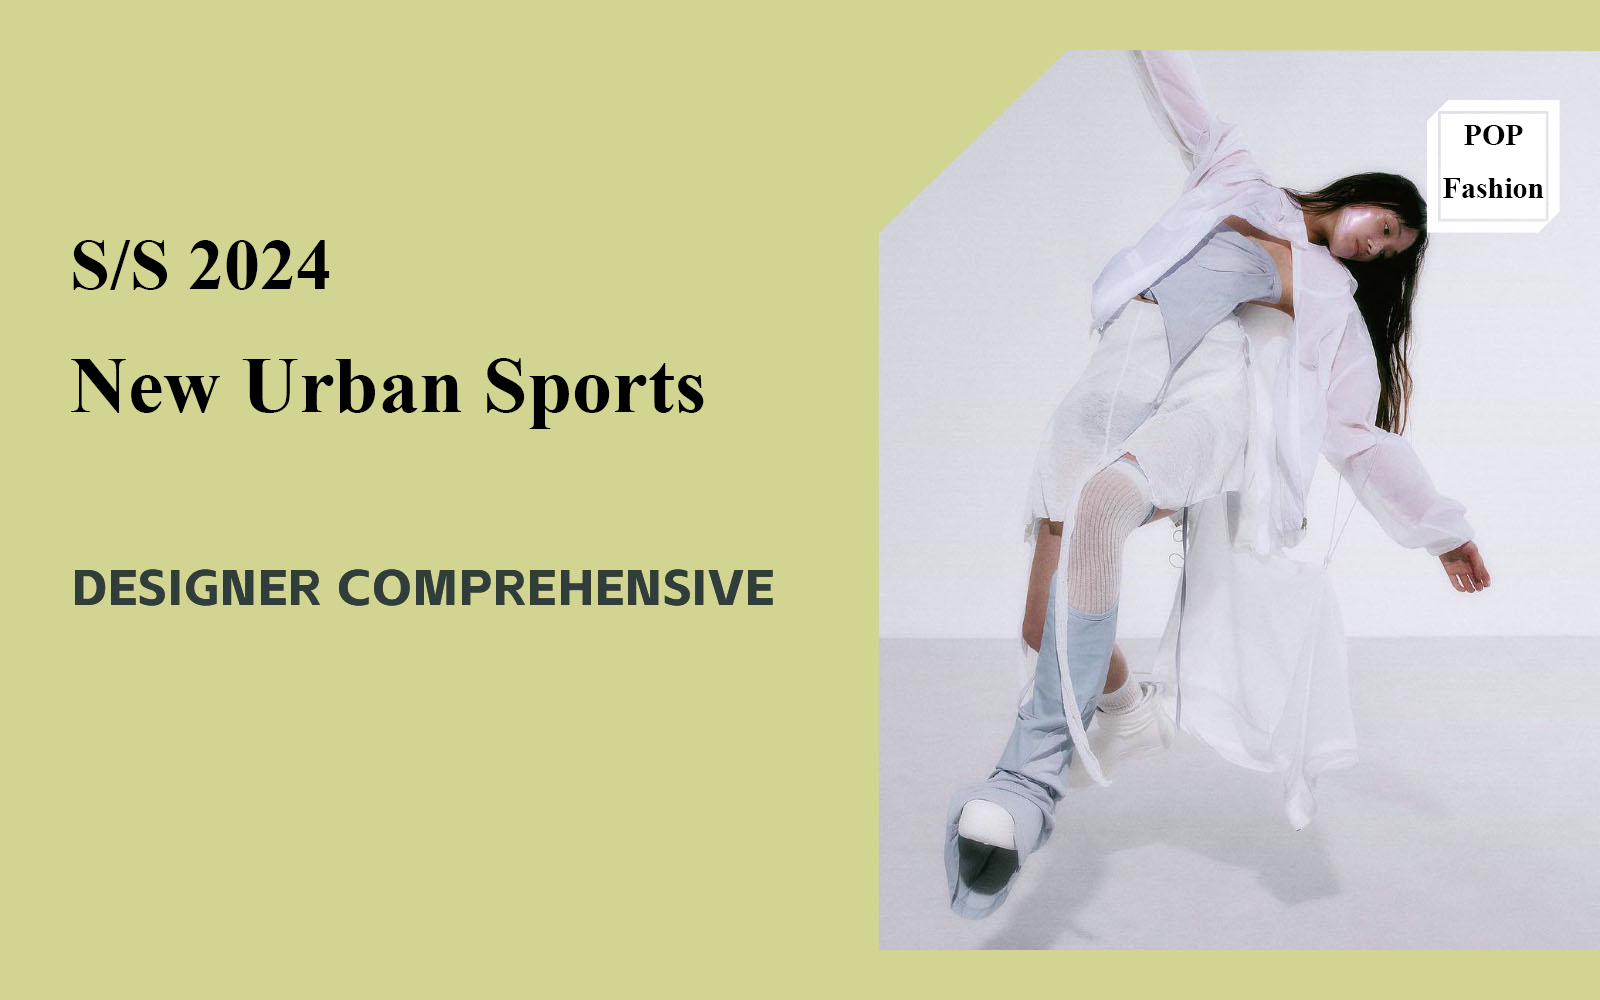 New Urban Sports -- The Comprehensive Analysis of Womenswear Designer Brand